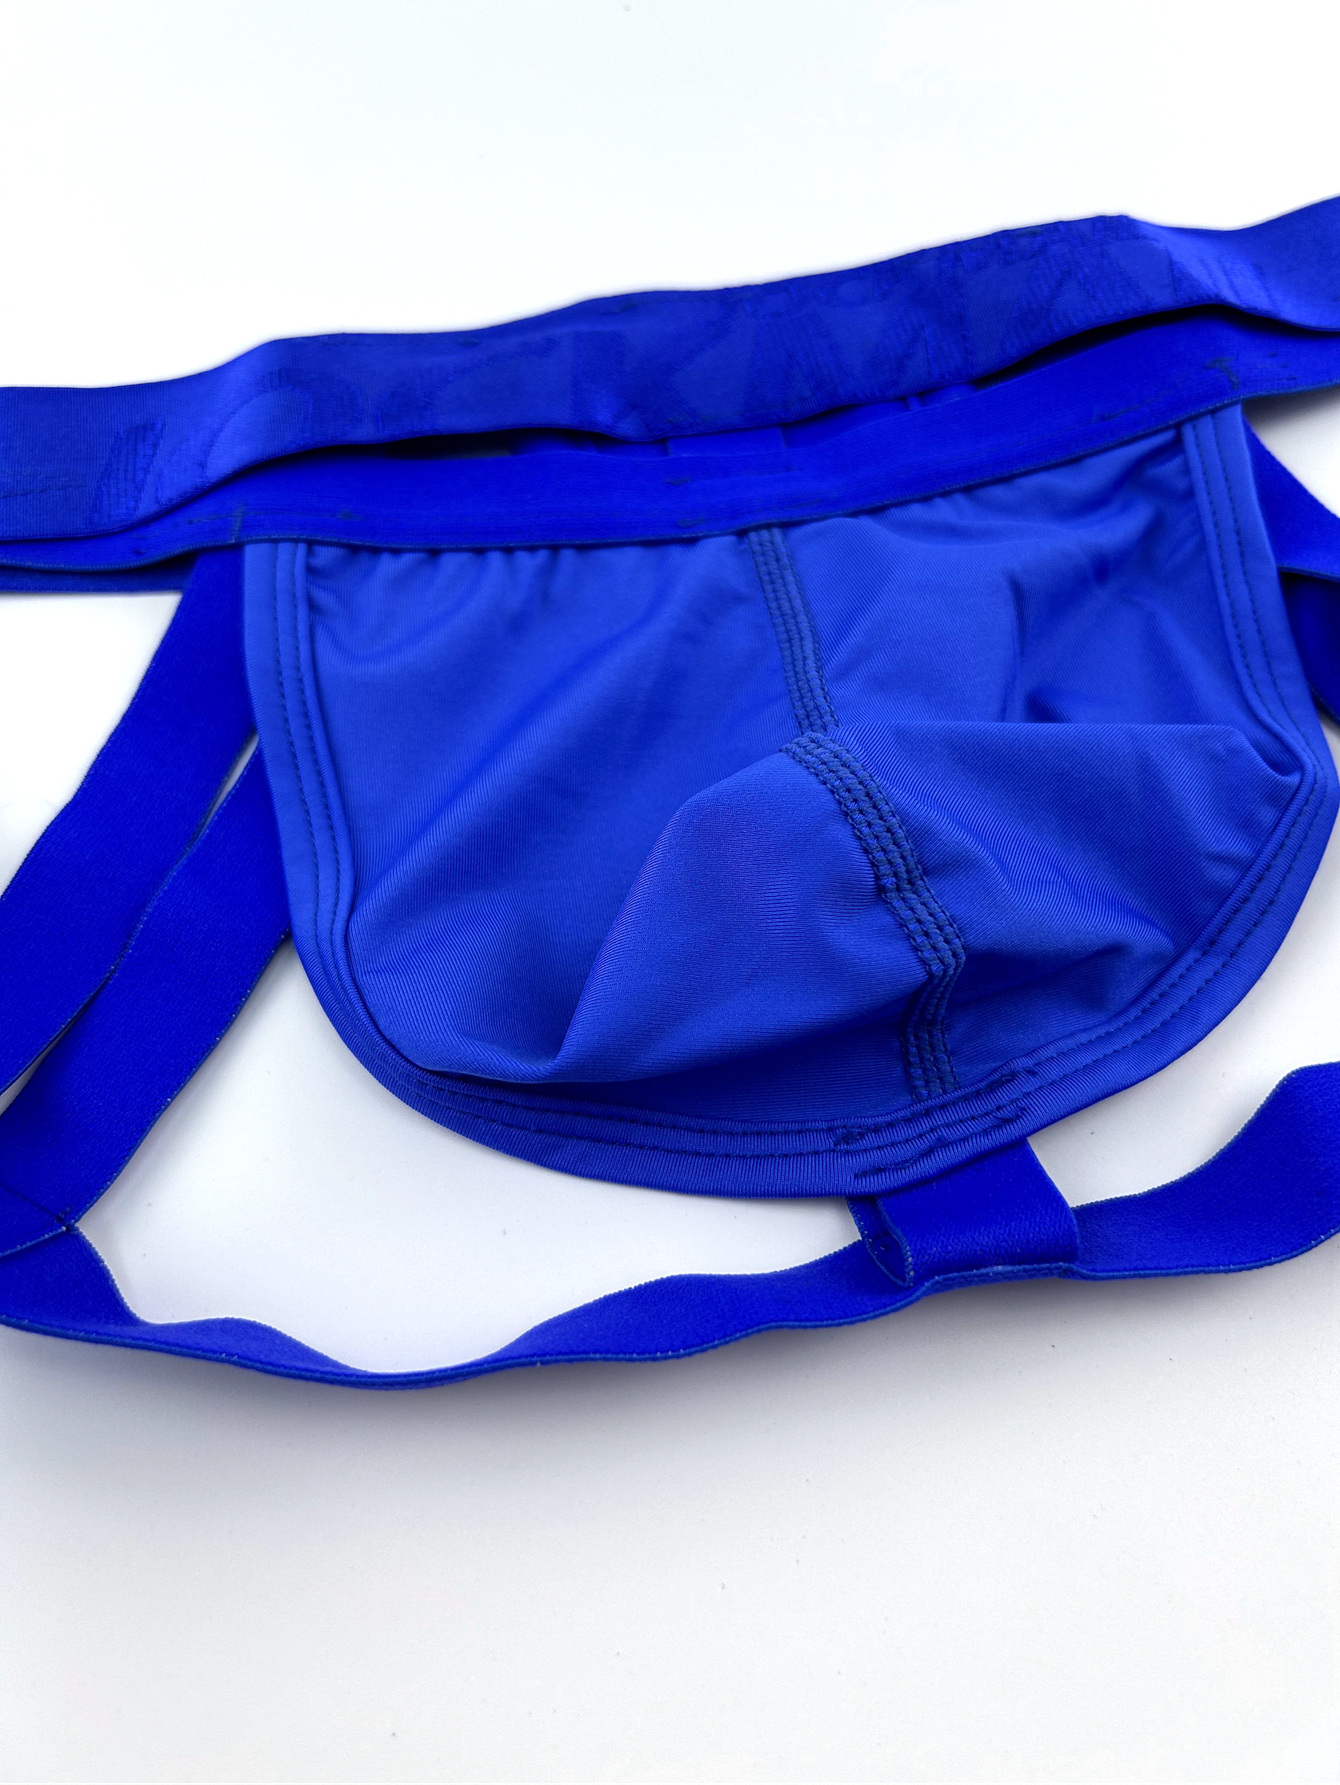 Sksloeg Men's Athletic Male Underwear Jockstrap Briefs Supporters G-Strings Thongs Royal Blue L,(2Pcs), Women's, Size: Large